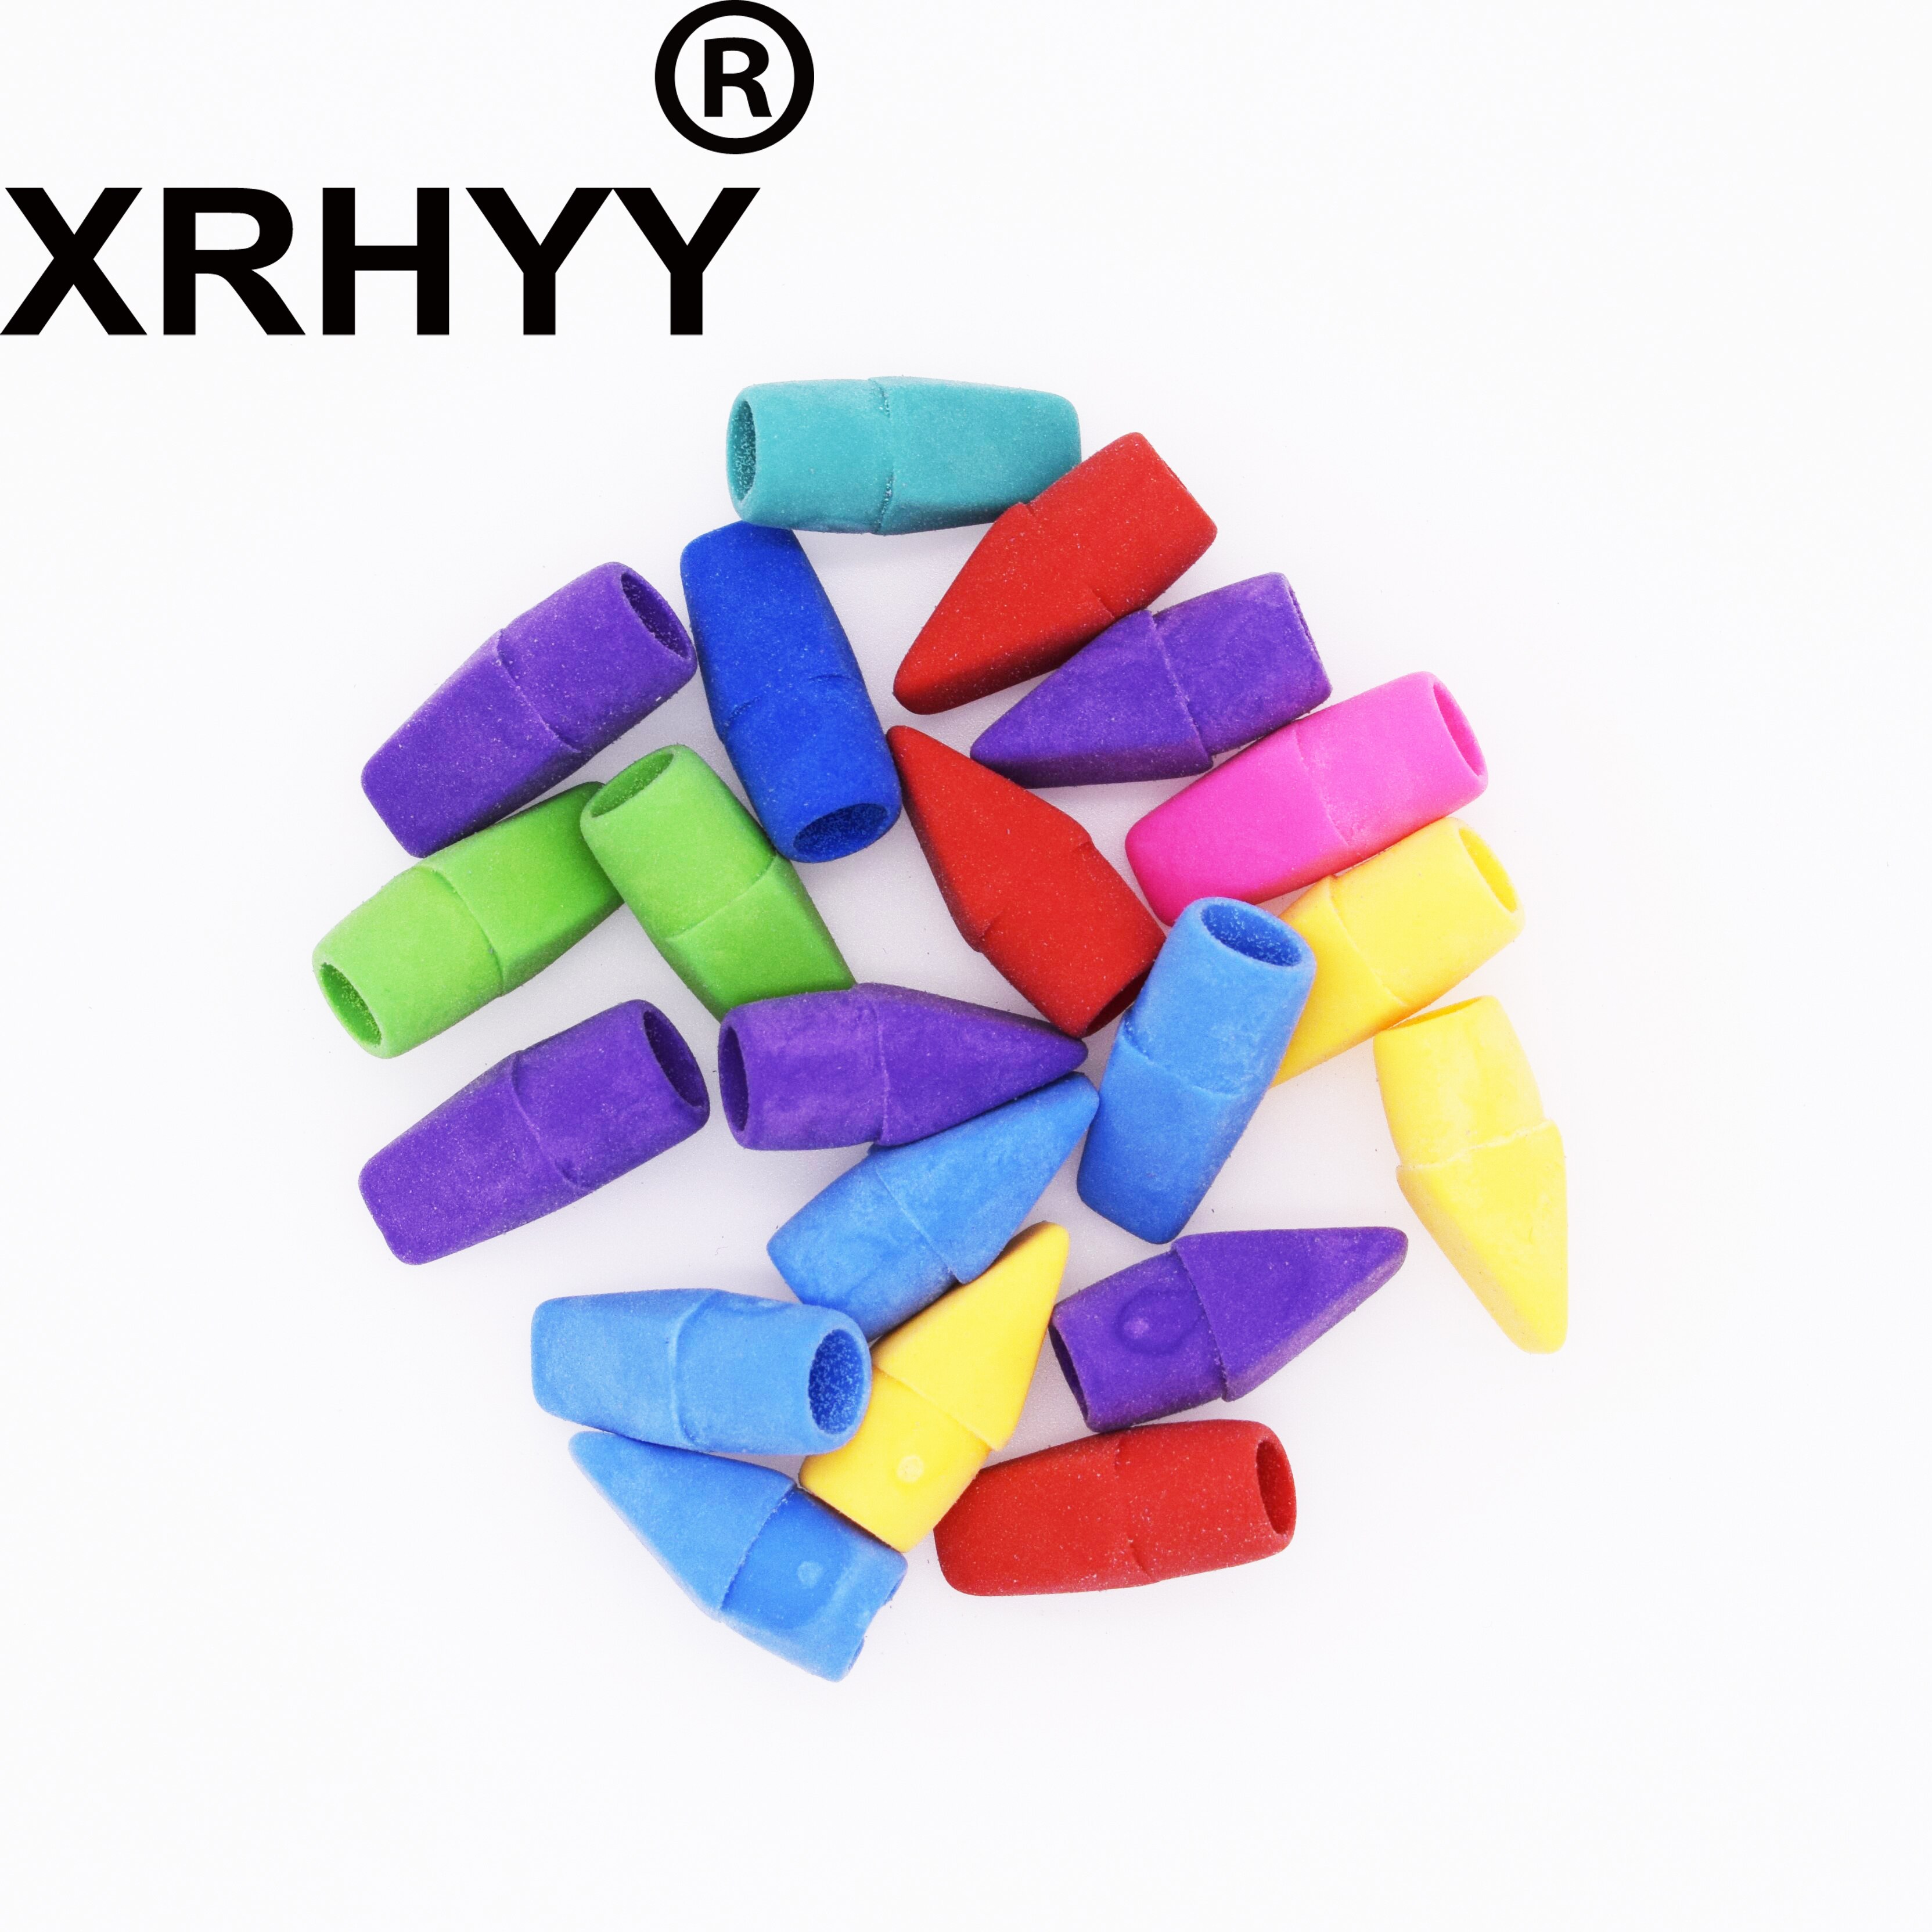 XRHYY 20 PCS Diverse Kleuren Potlood Cap Gummen